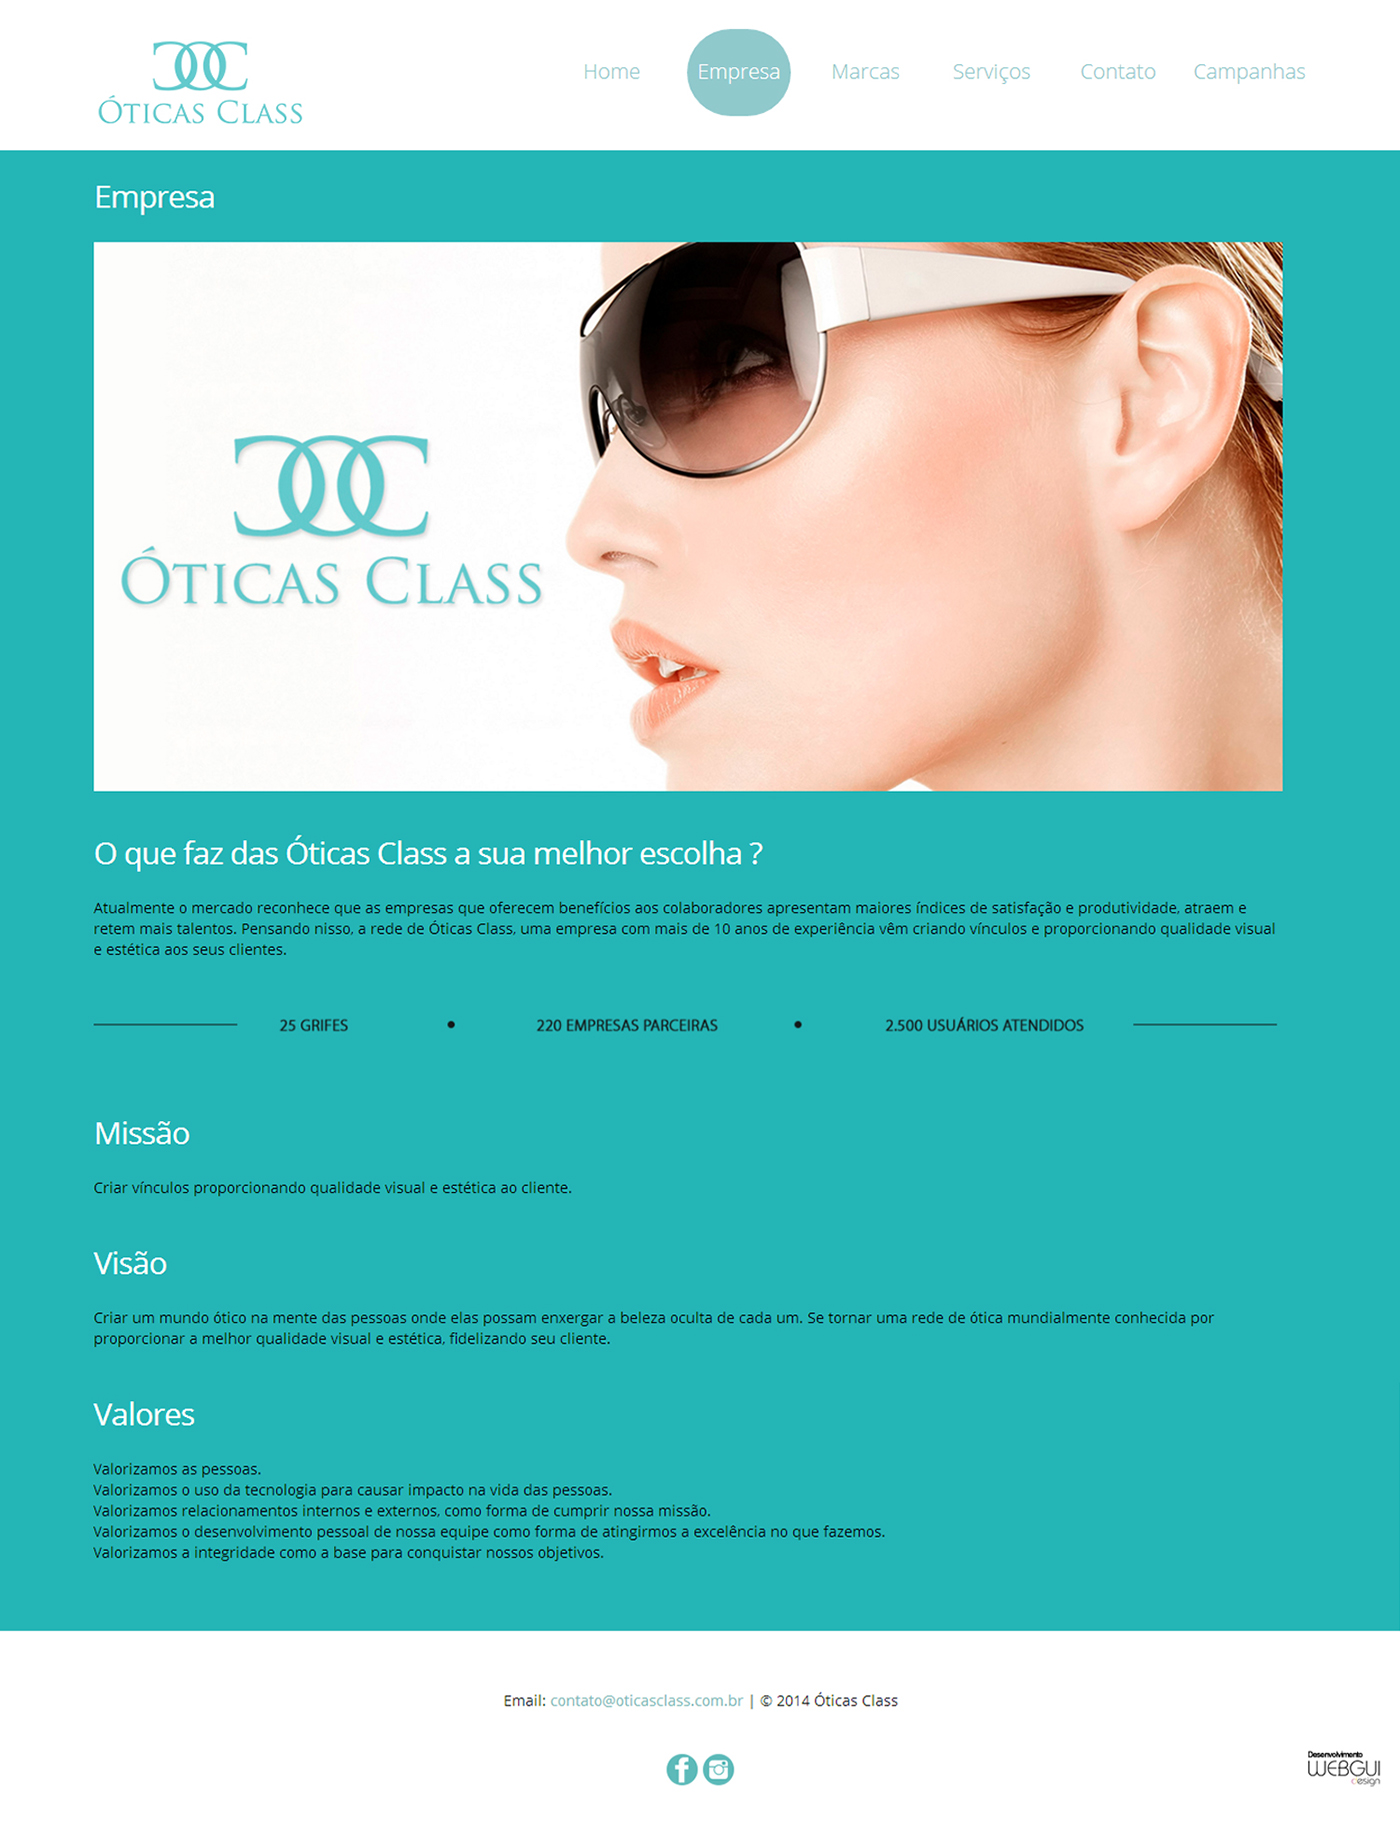 oticasclass OTICA óculos sunglass glass webguidesign webgui agencia saopaulo SP Brasil Brazil Website site